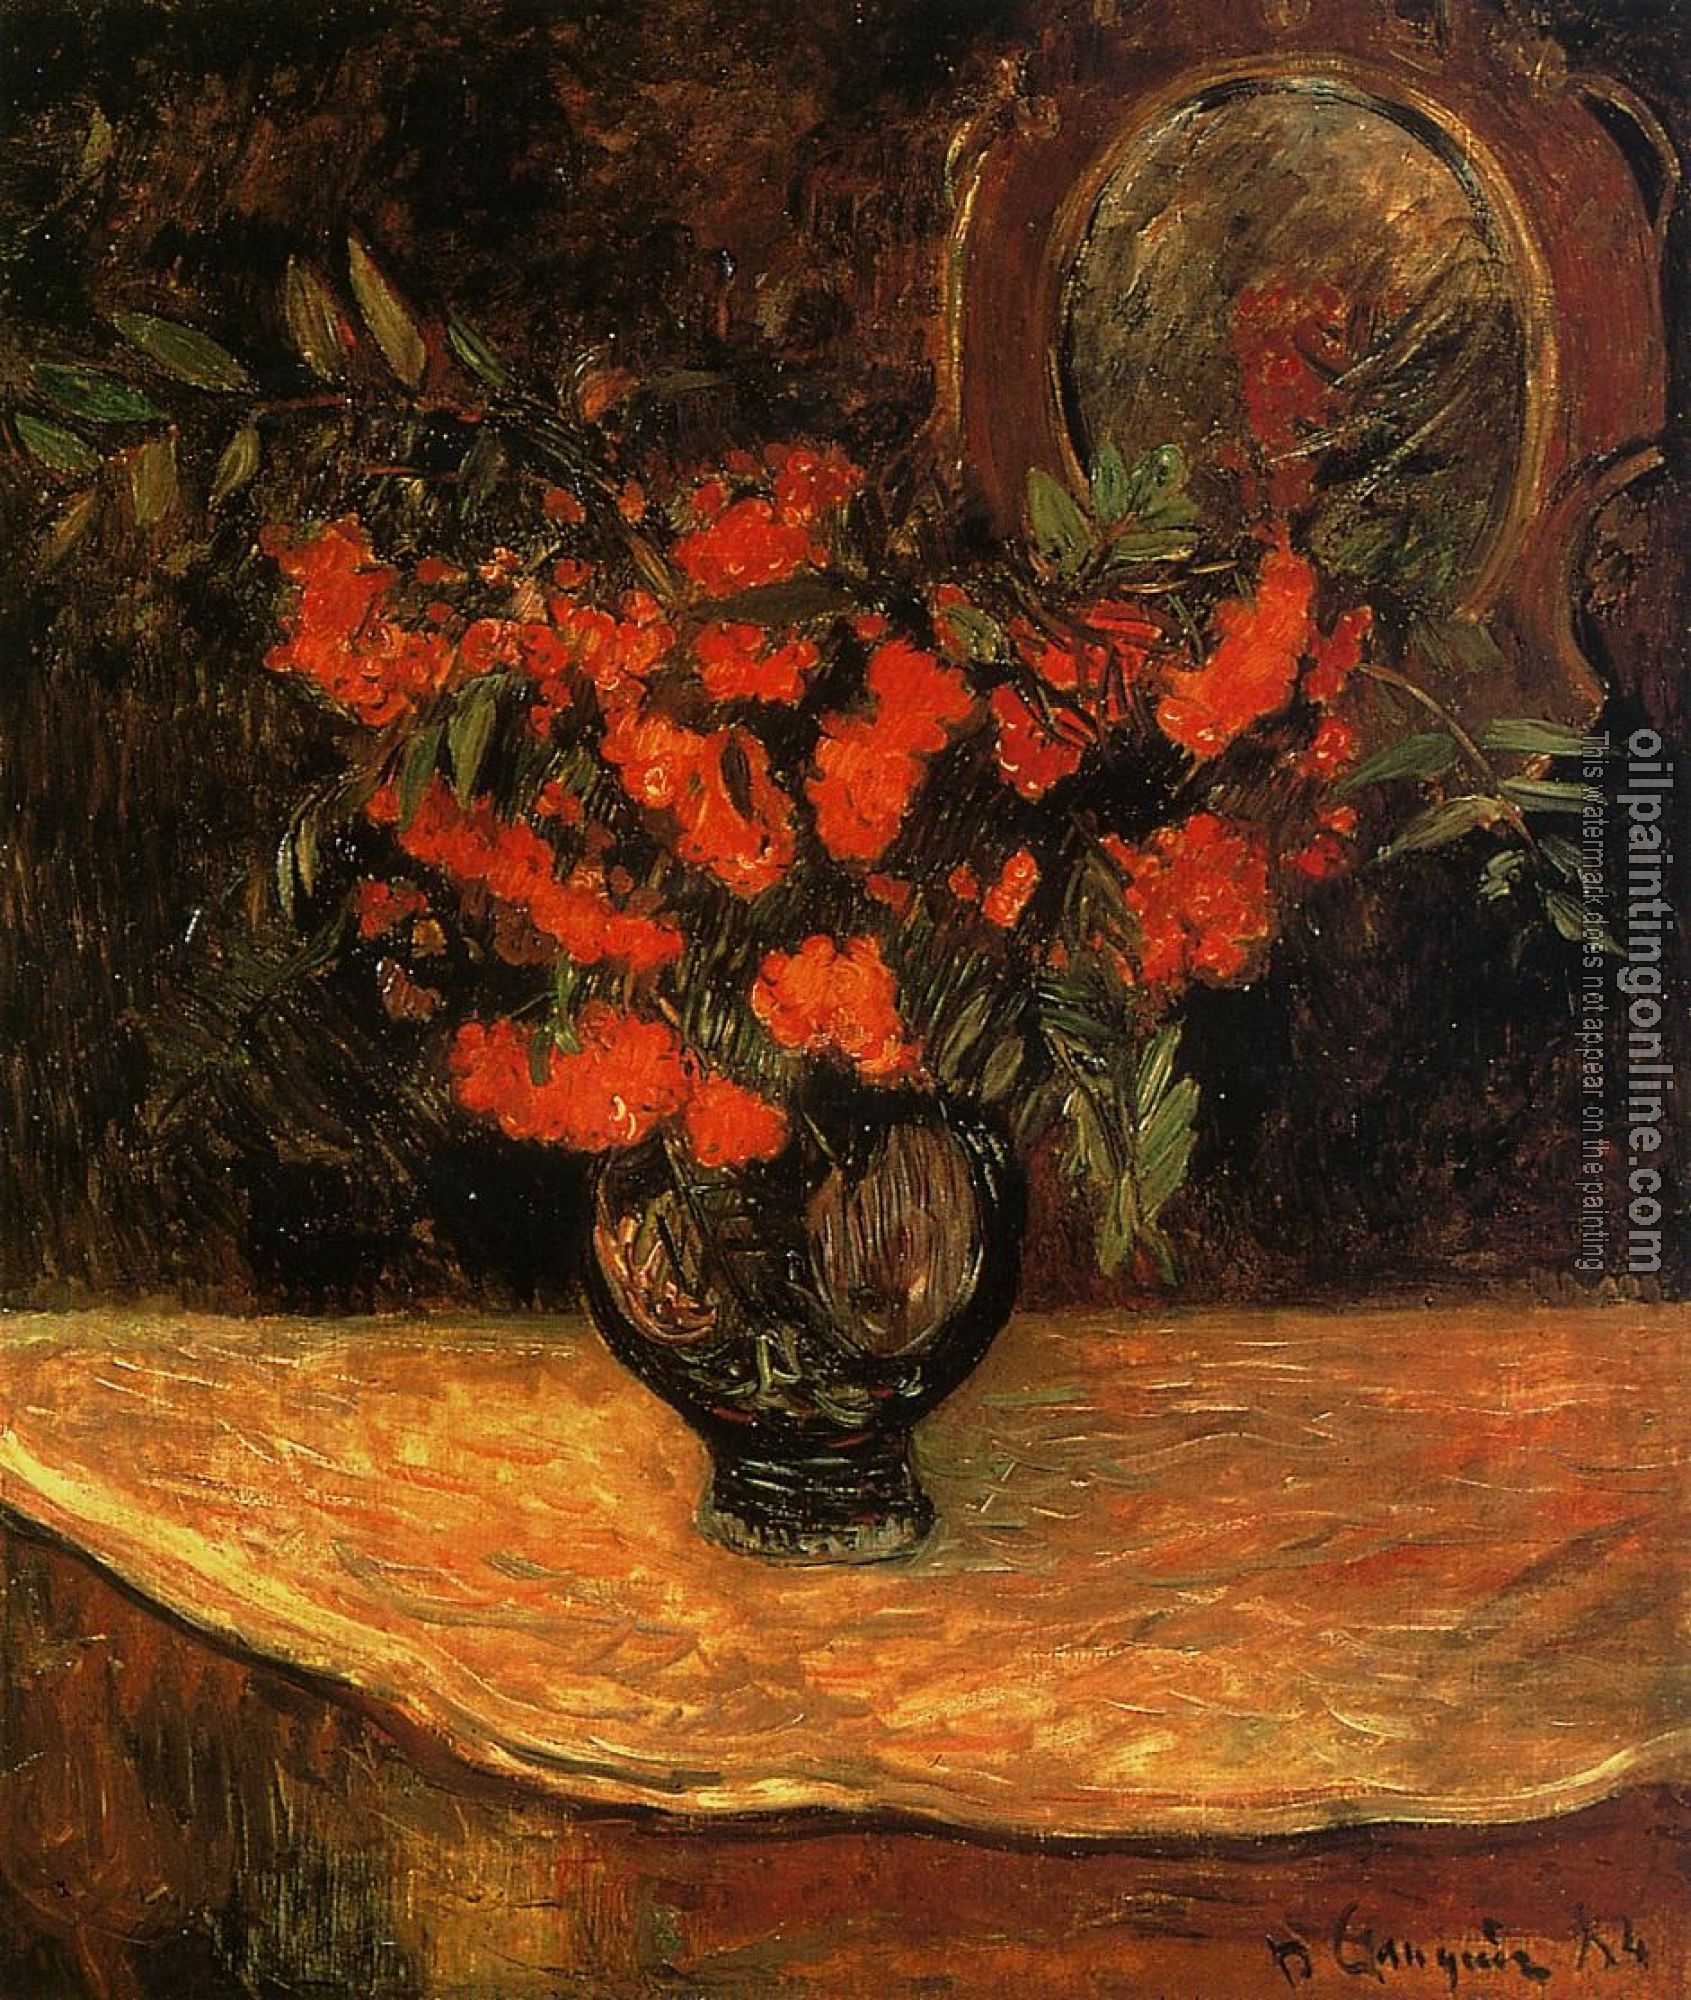 Gauguin, Paul - Rowan Bouquet